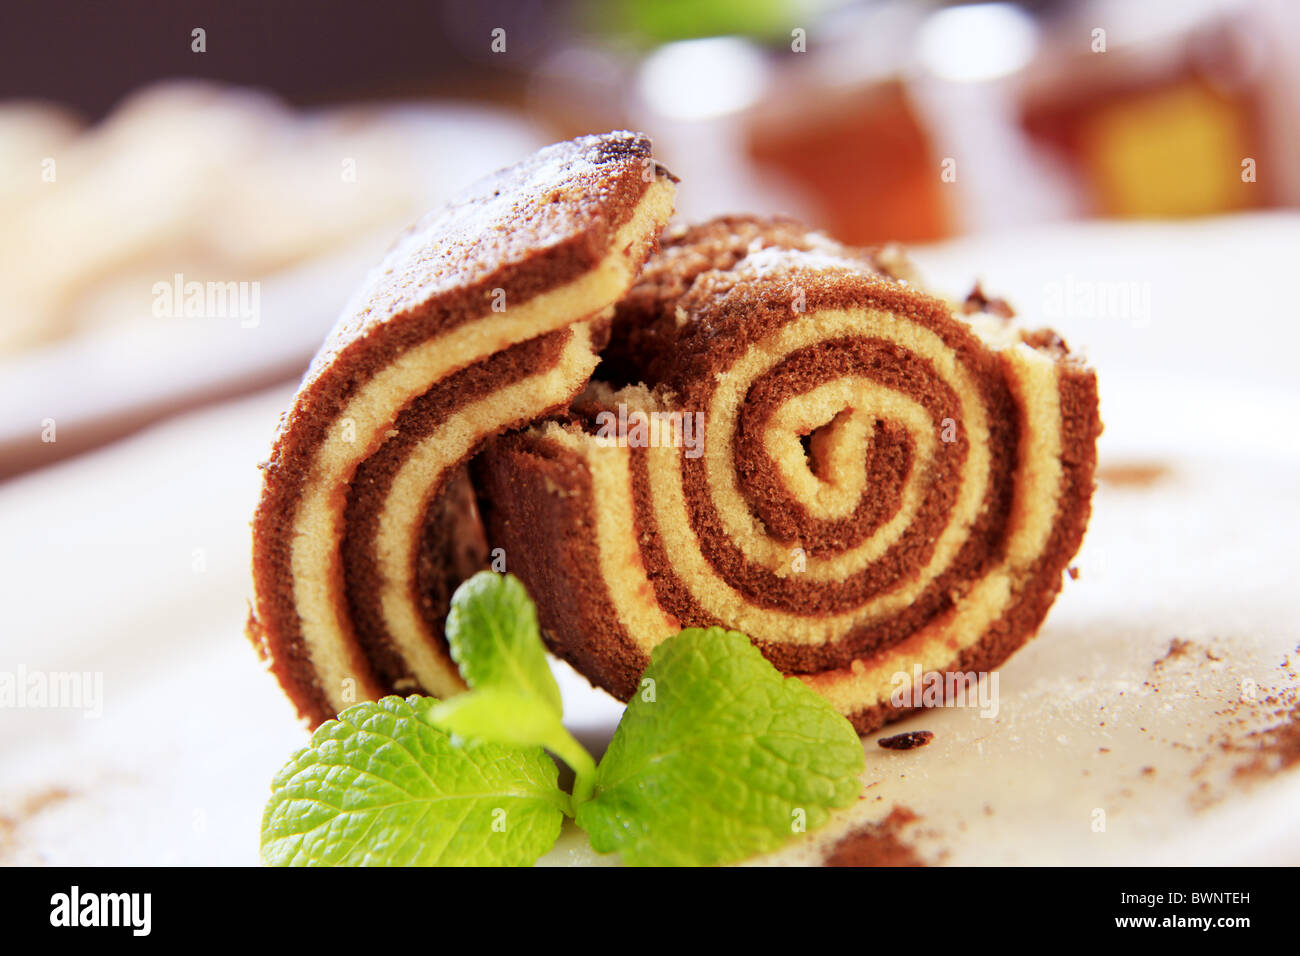 Slice of sponge cake roll Stock Photo